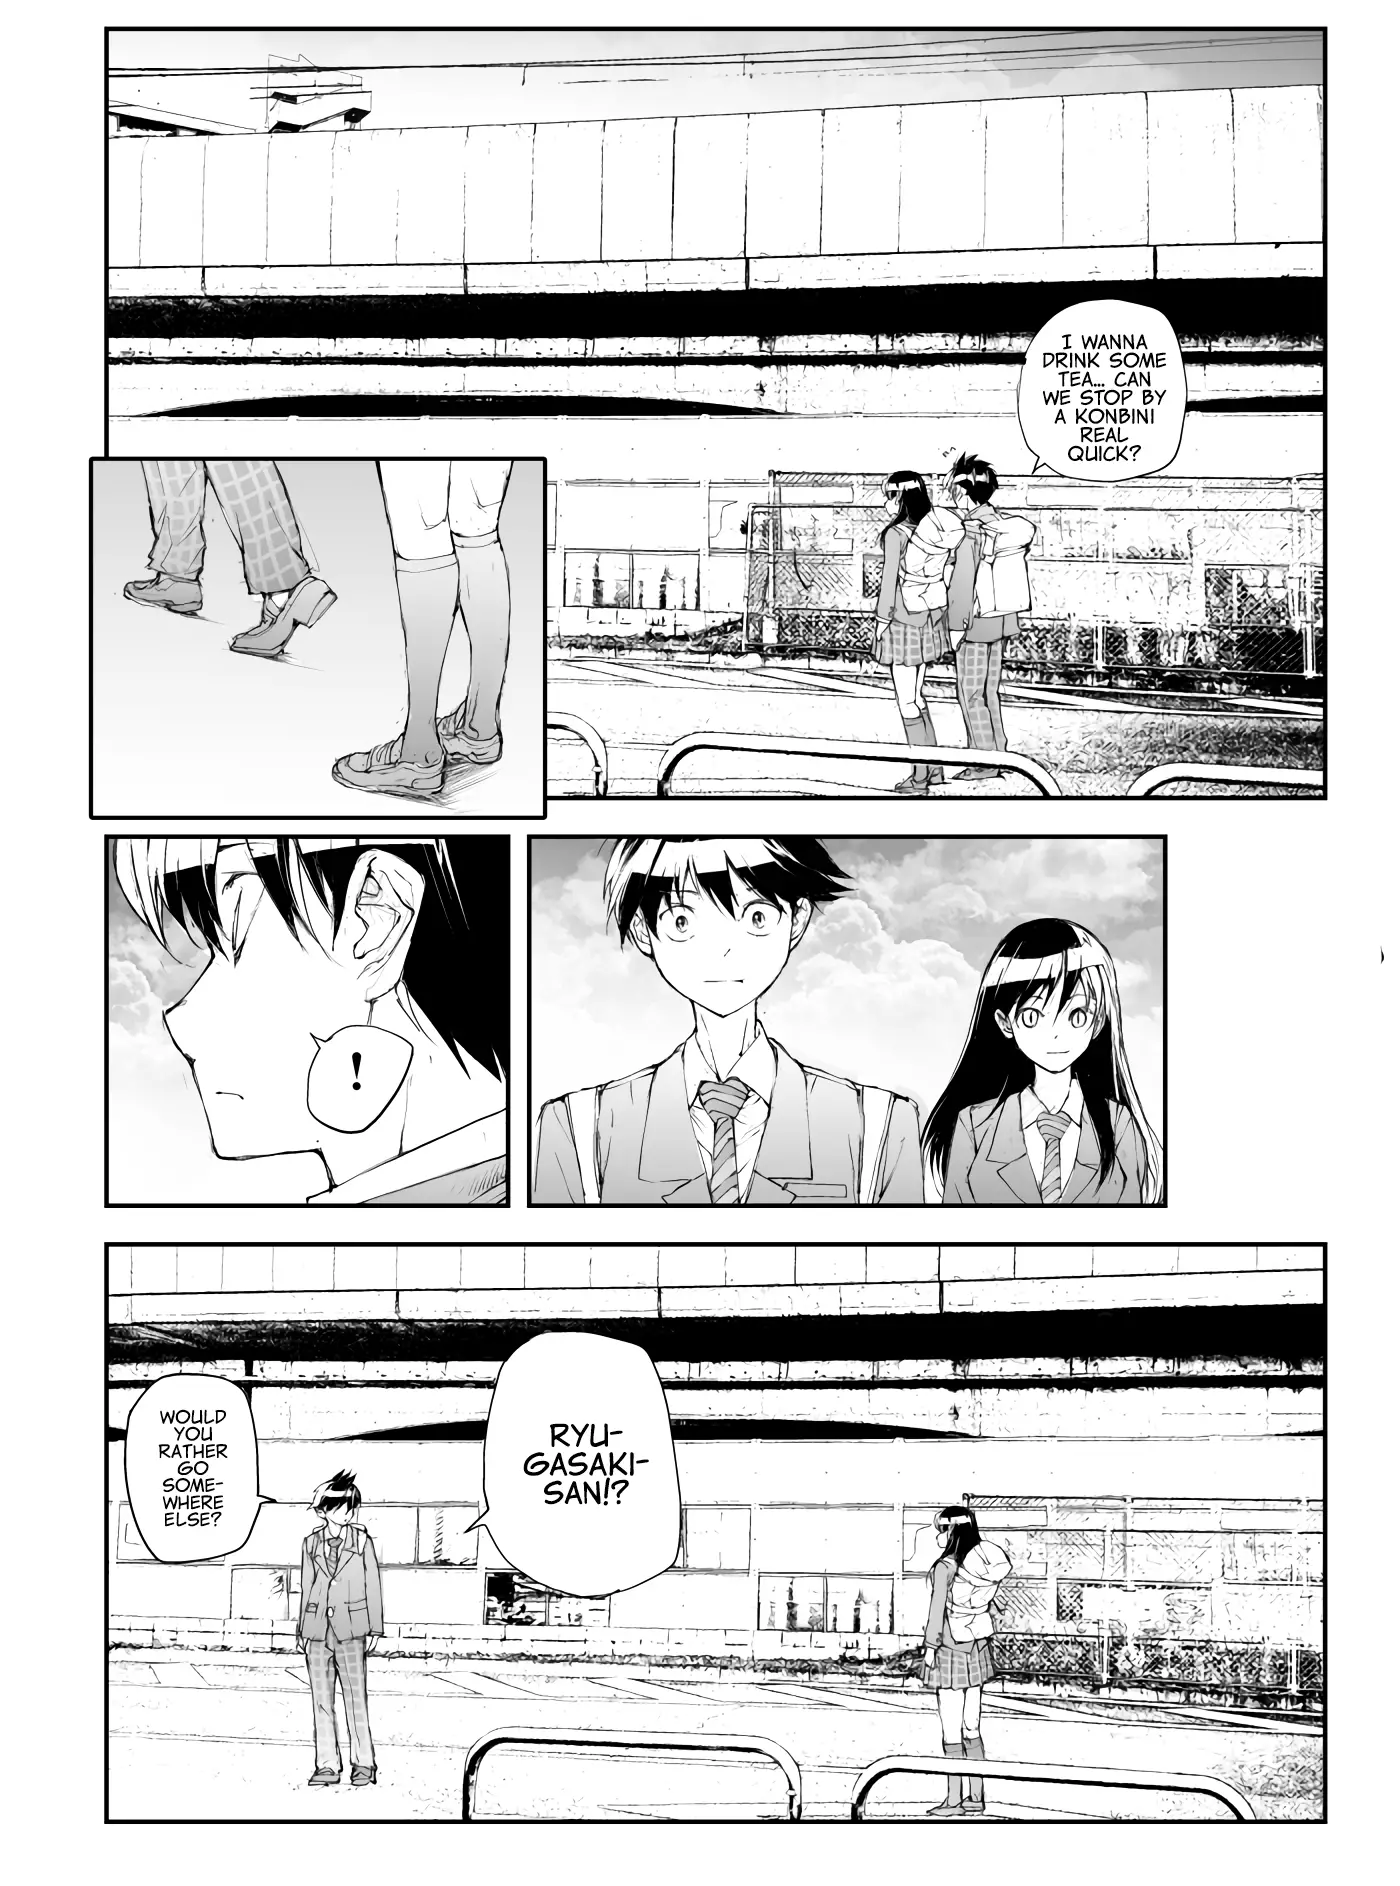 Shed! Ryugasaki-San - 117 page 2-757e3f1f